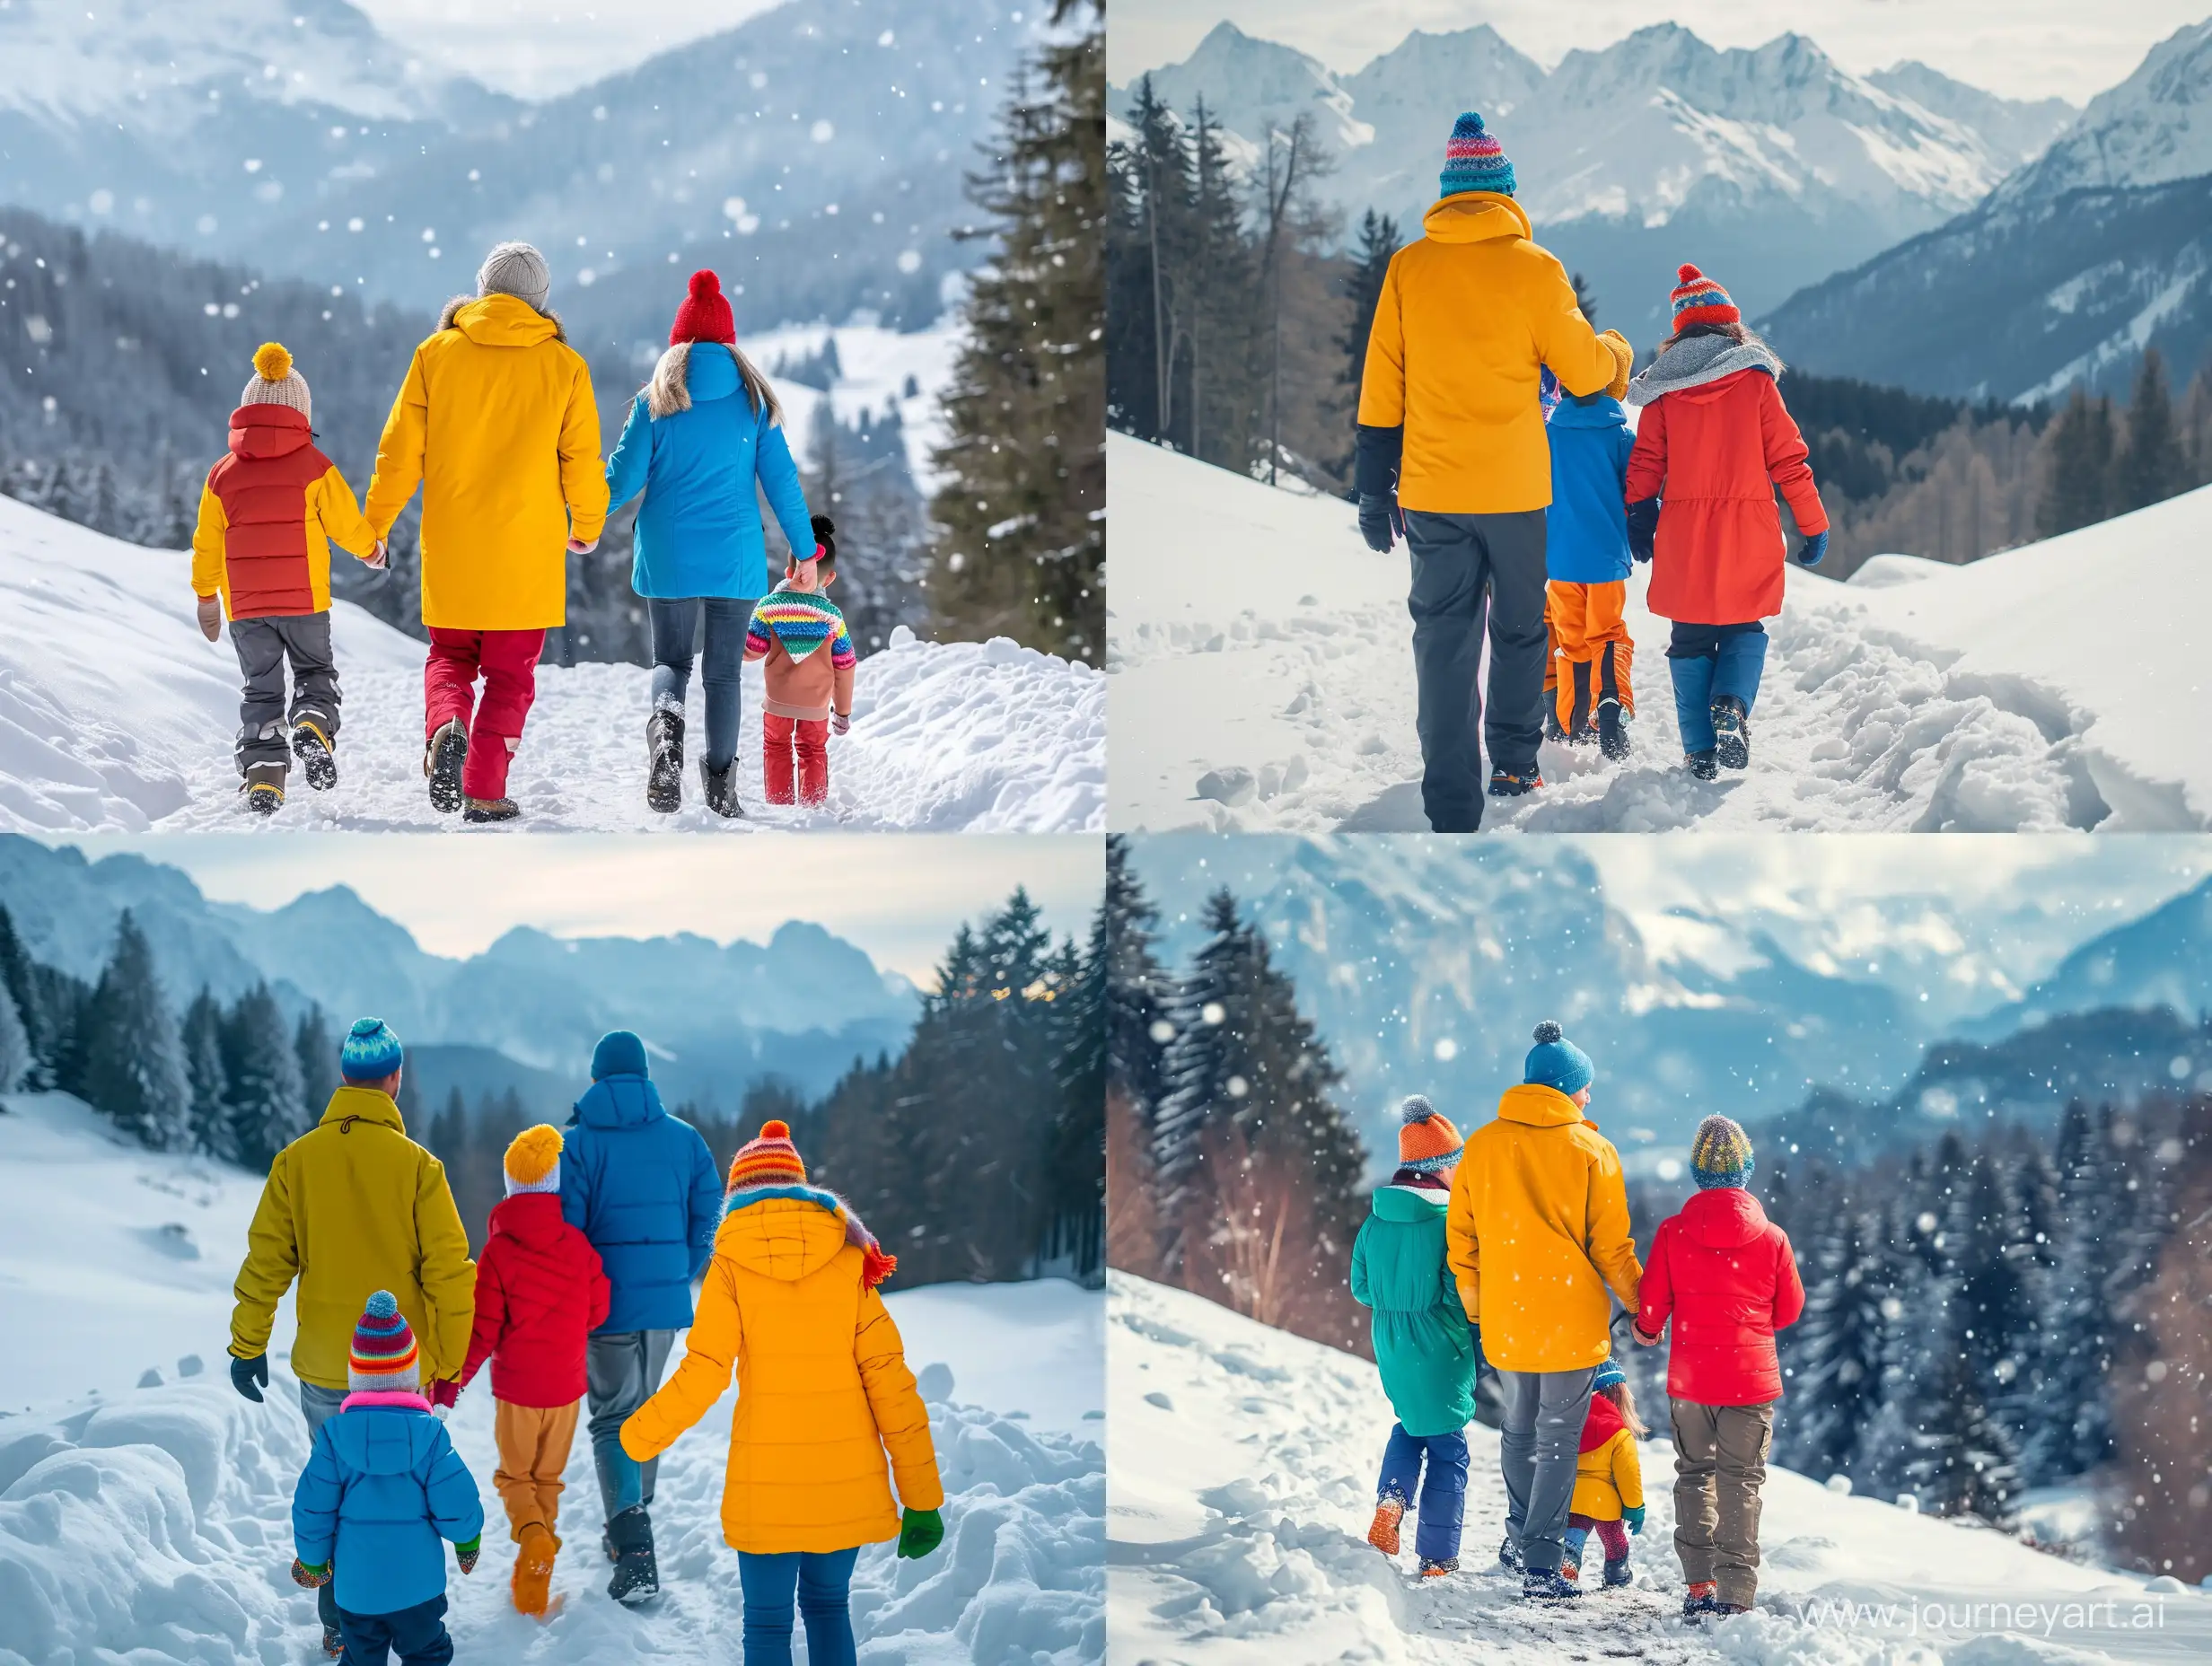 Joyful-Family-Winter-Walk-in-Colorful-Attire-on-Snowy-Mountain